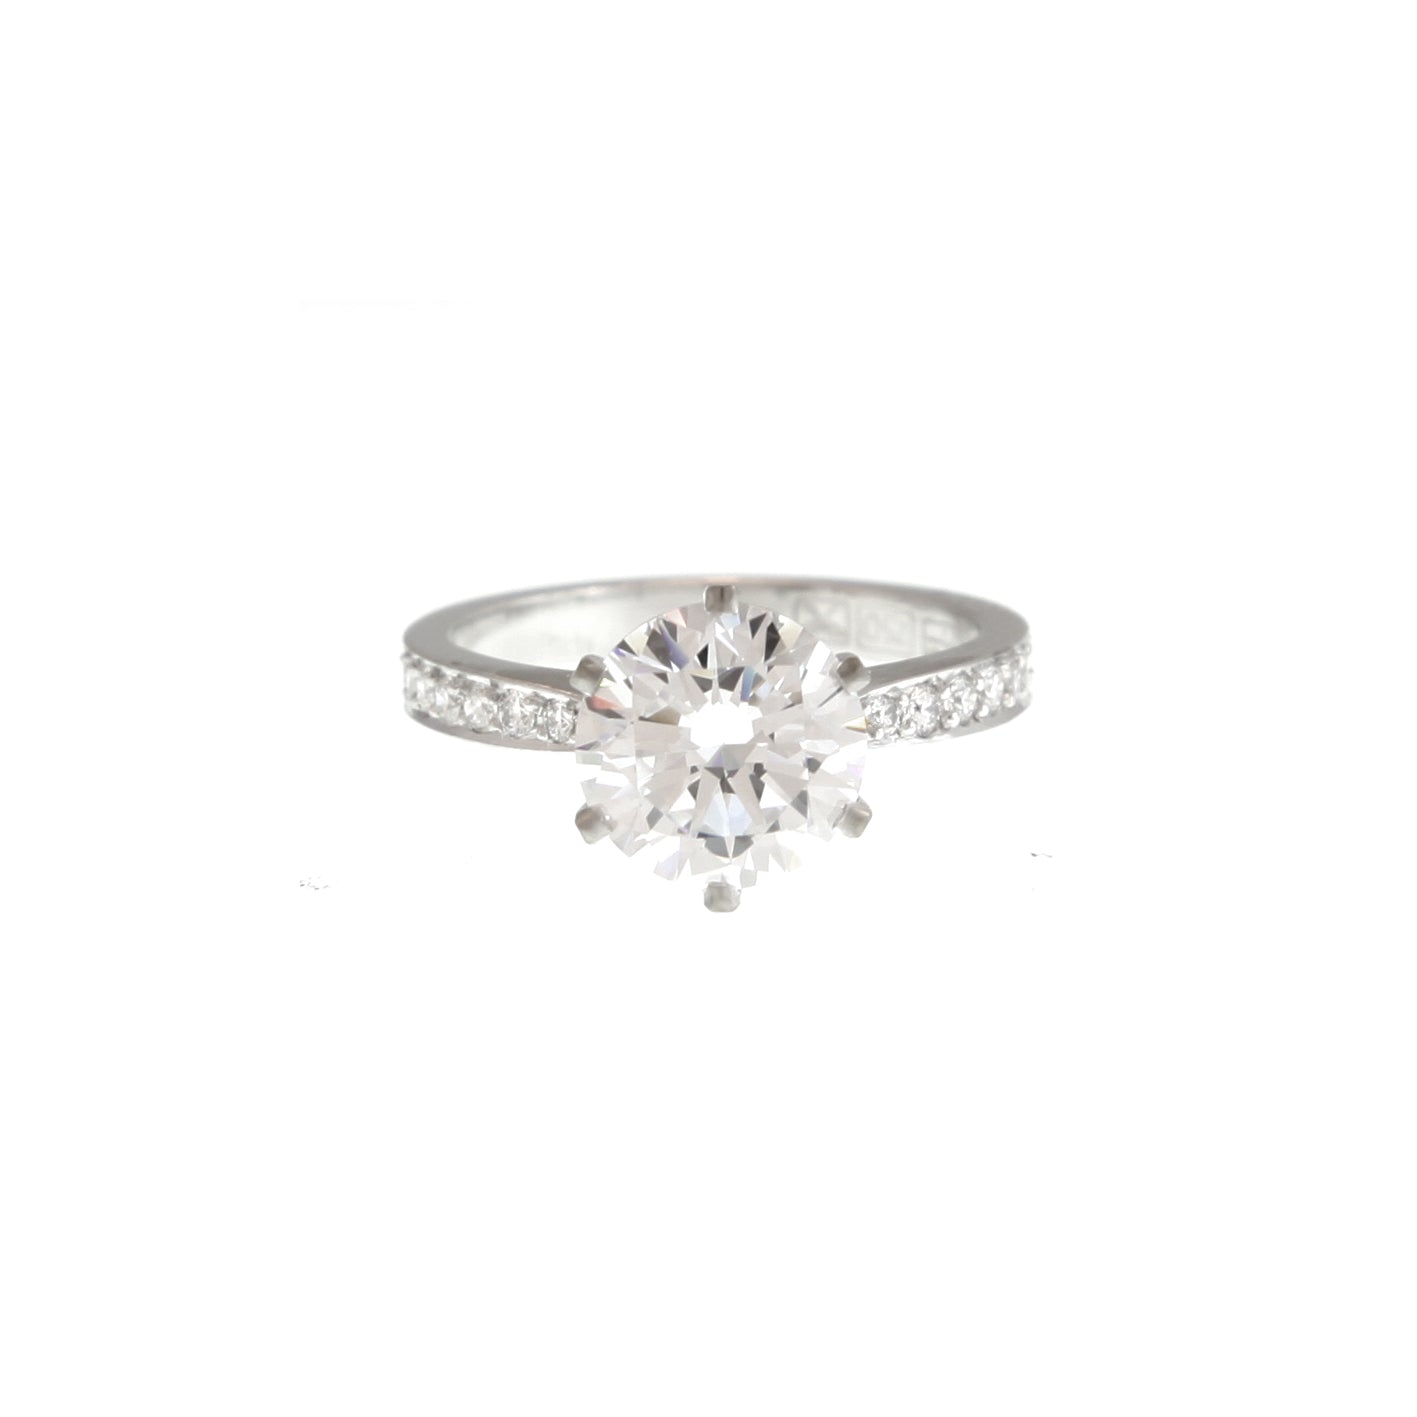  Round Brilliant Cut Diamond Thread-Set Engagement Ring White Gold